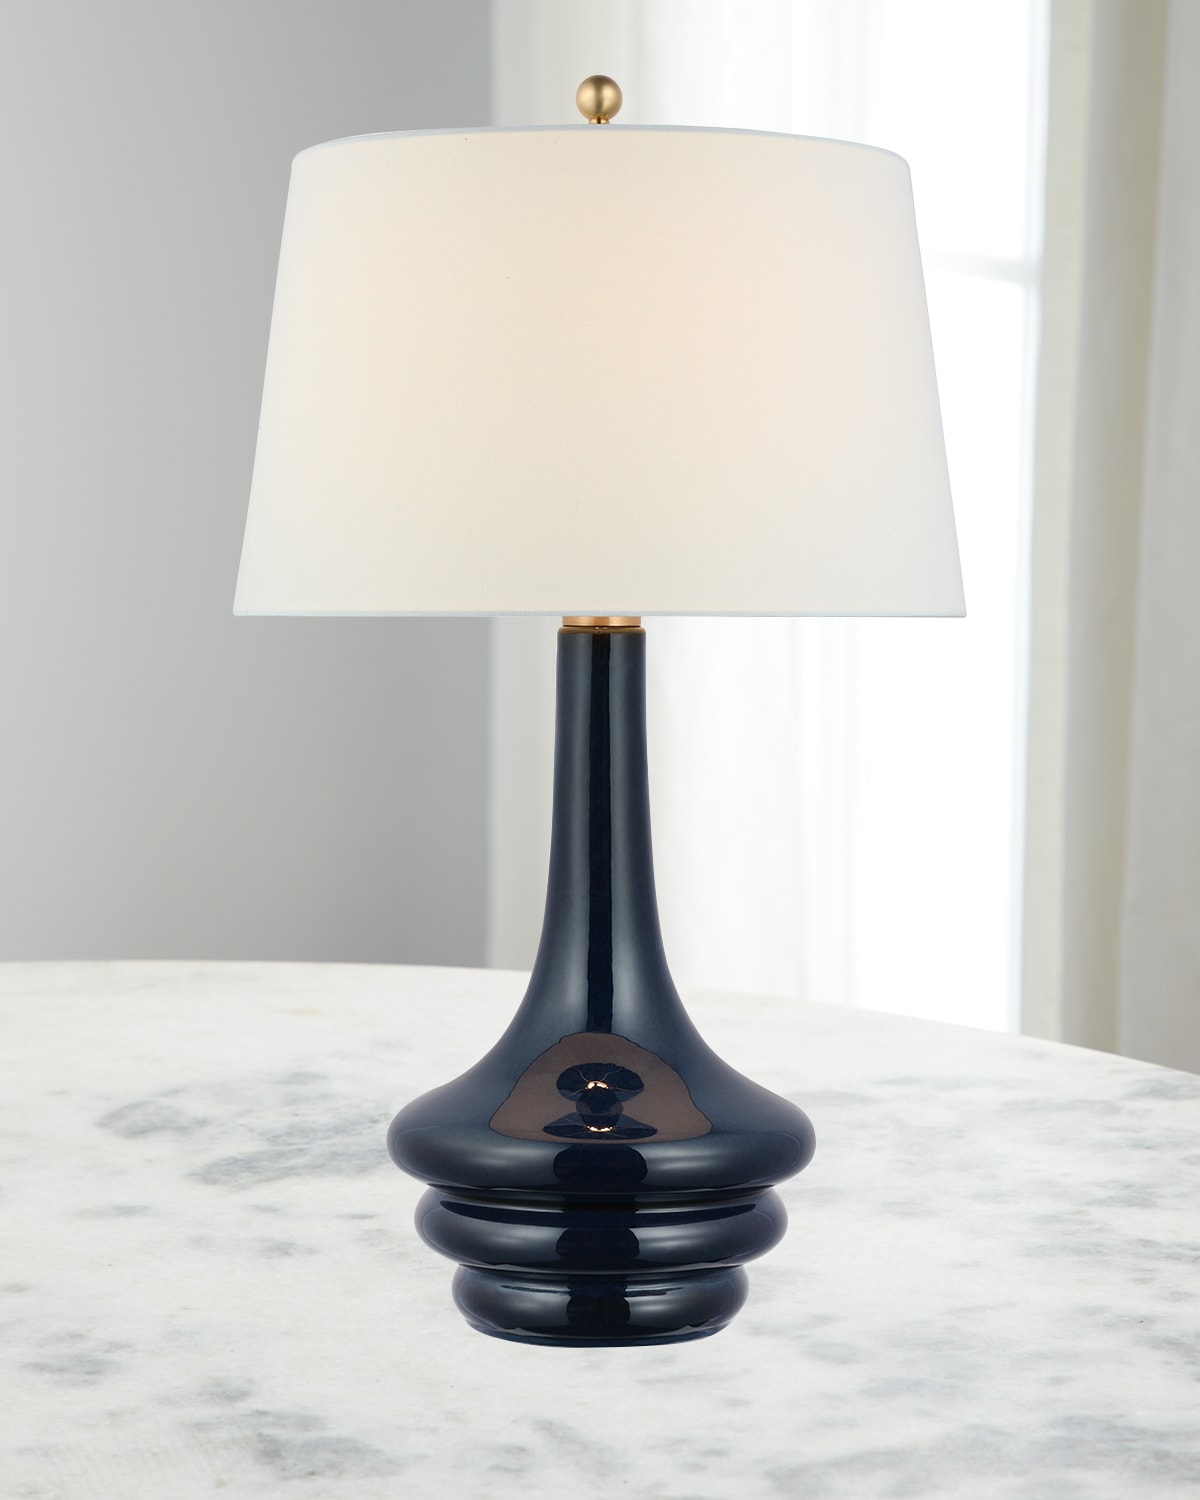 Chapman & Myers Wallis Large Table Lamp By